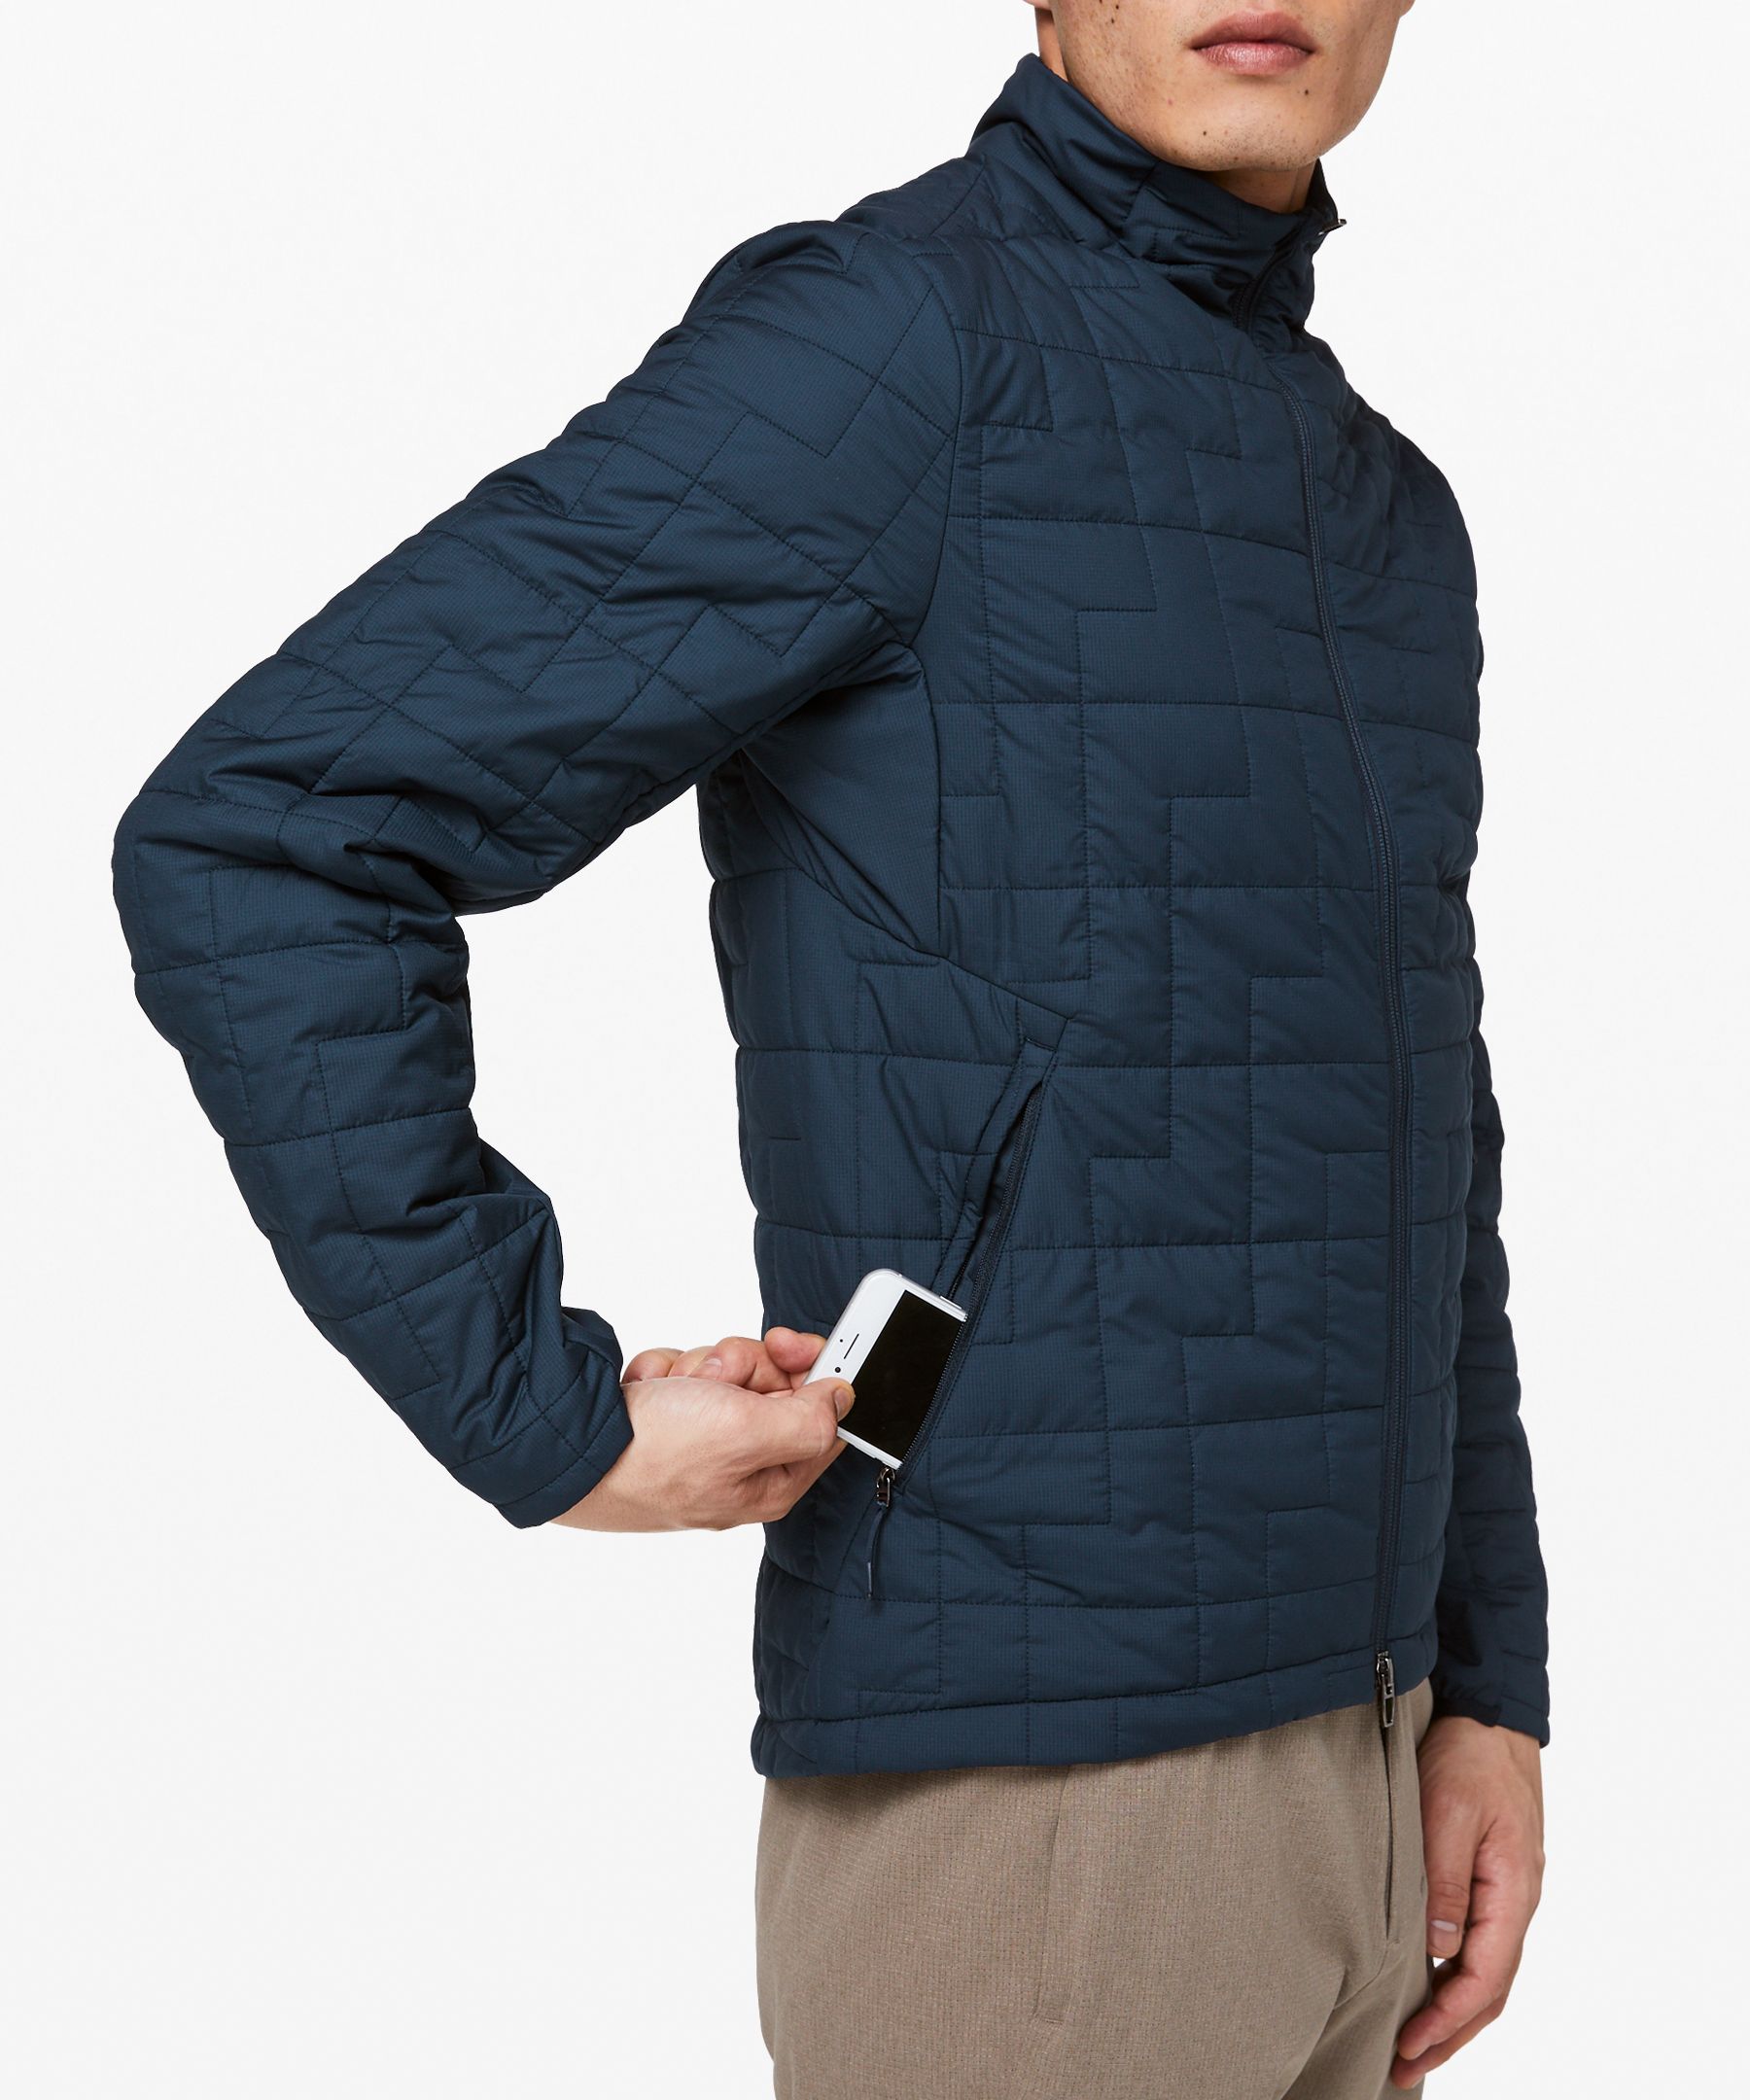 lululemon skyloft jacket